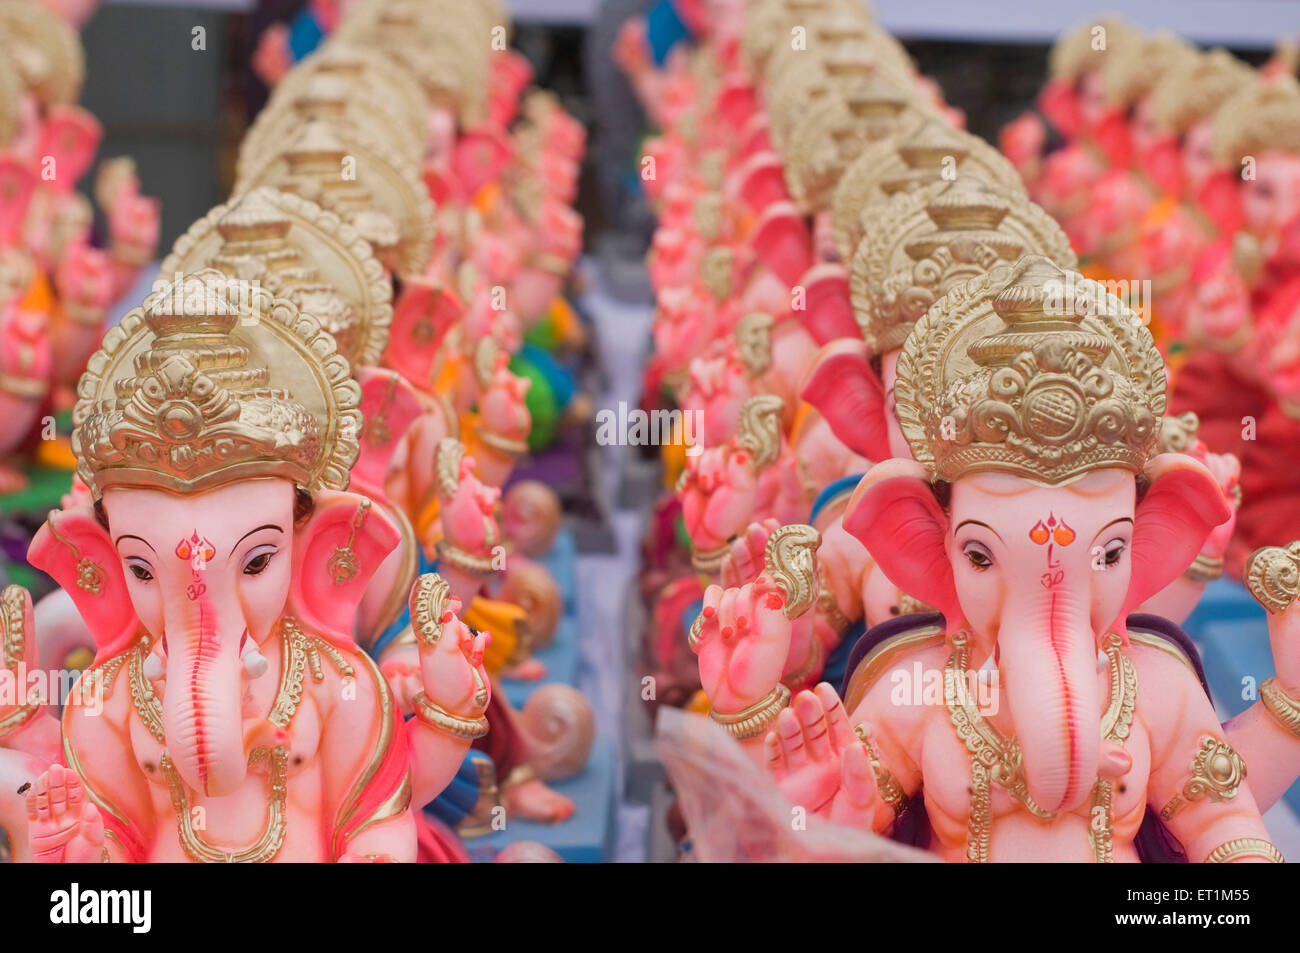 Several small idols of lord Ganesha line up for sale Pune Maharashtra India Asia Stock Photo